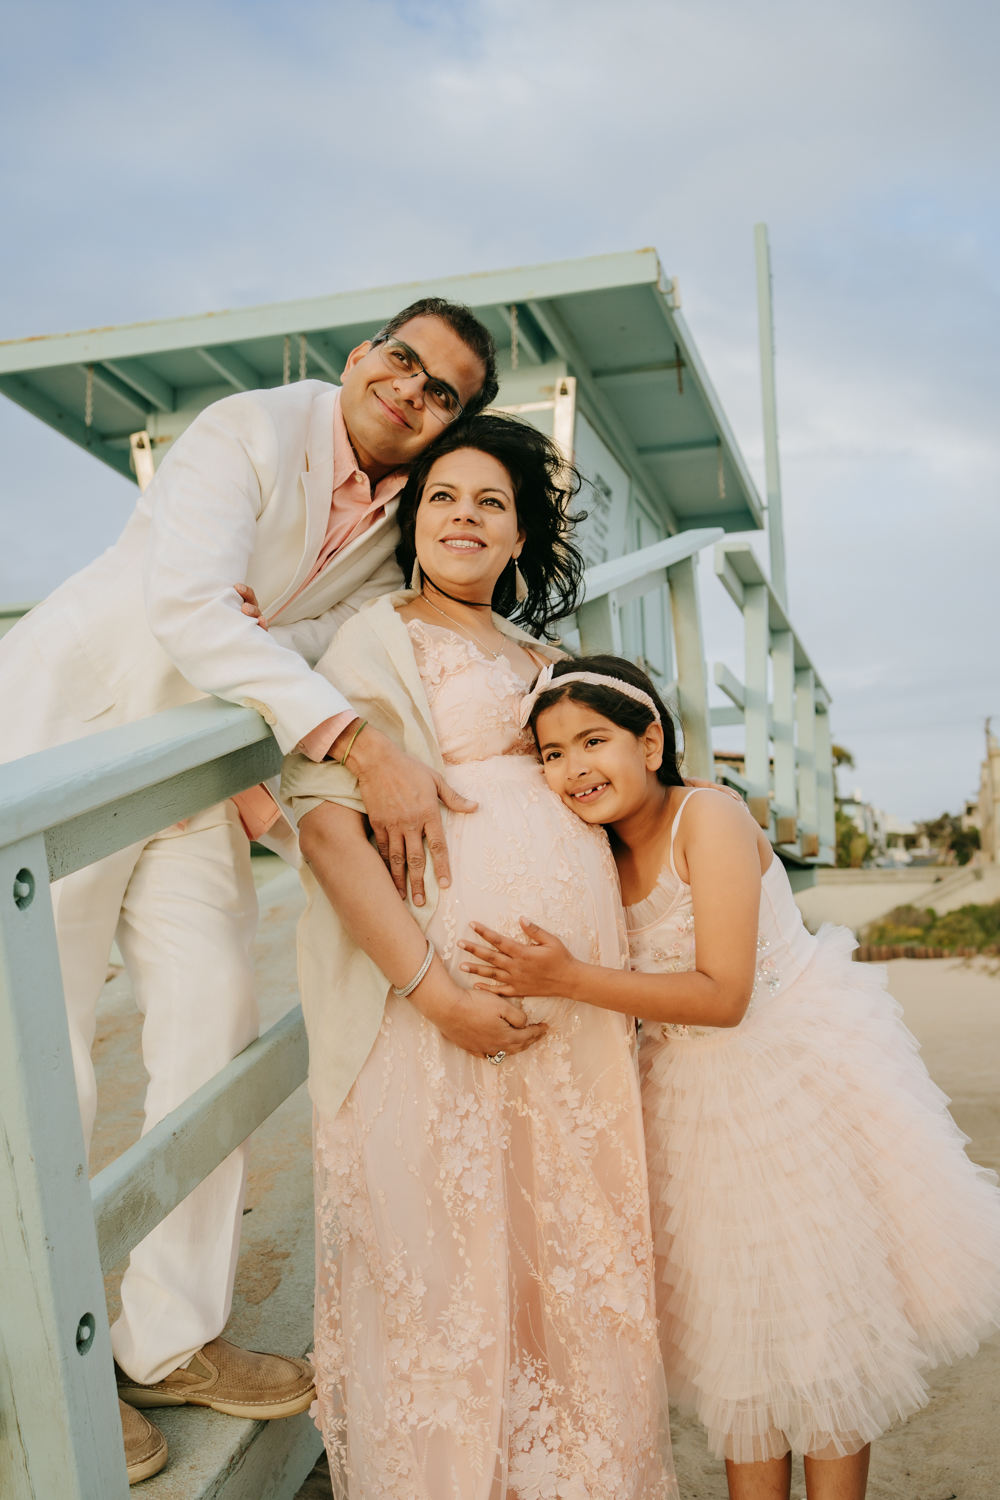 Family and Maternity Photos at Manhattan Beach, Los Angeles, California